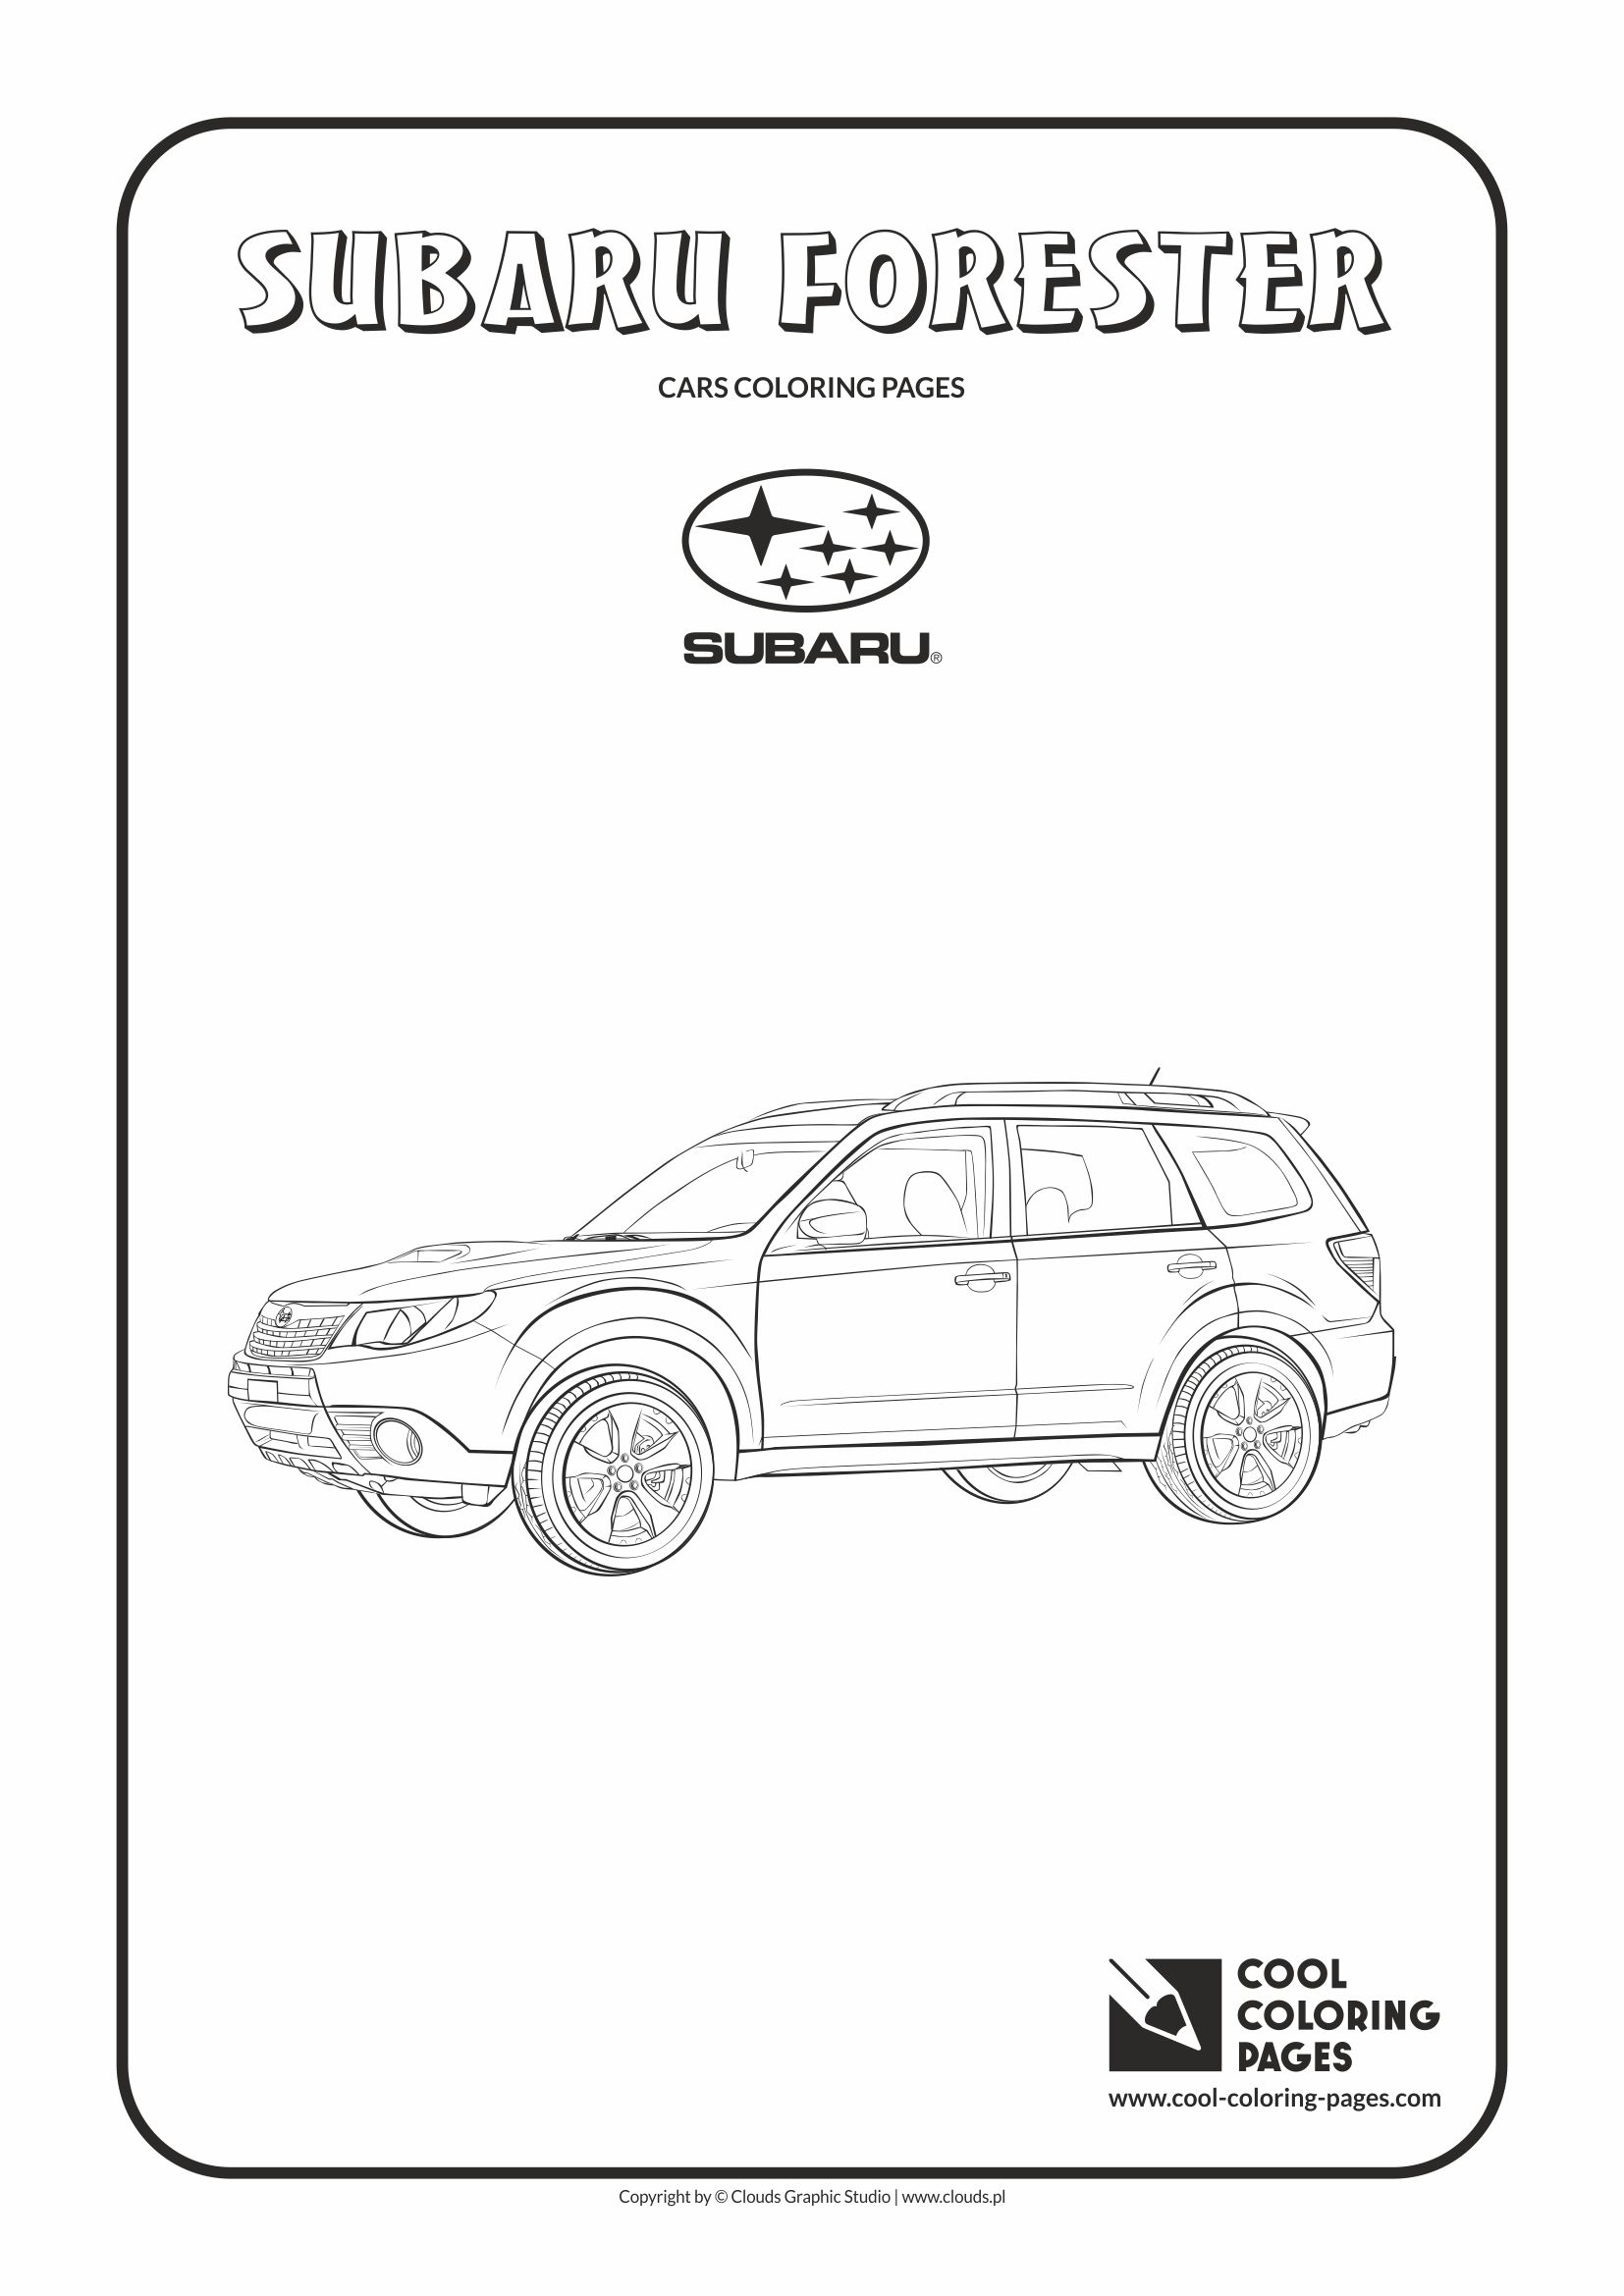 Subaru wrx sti coloring pages